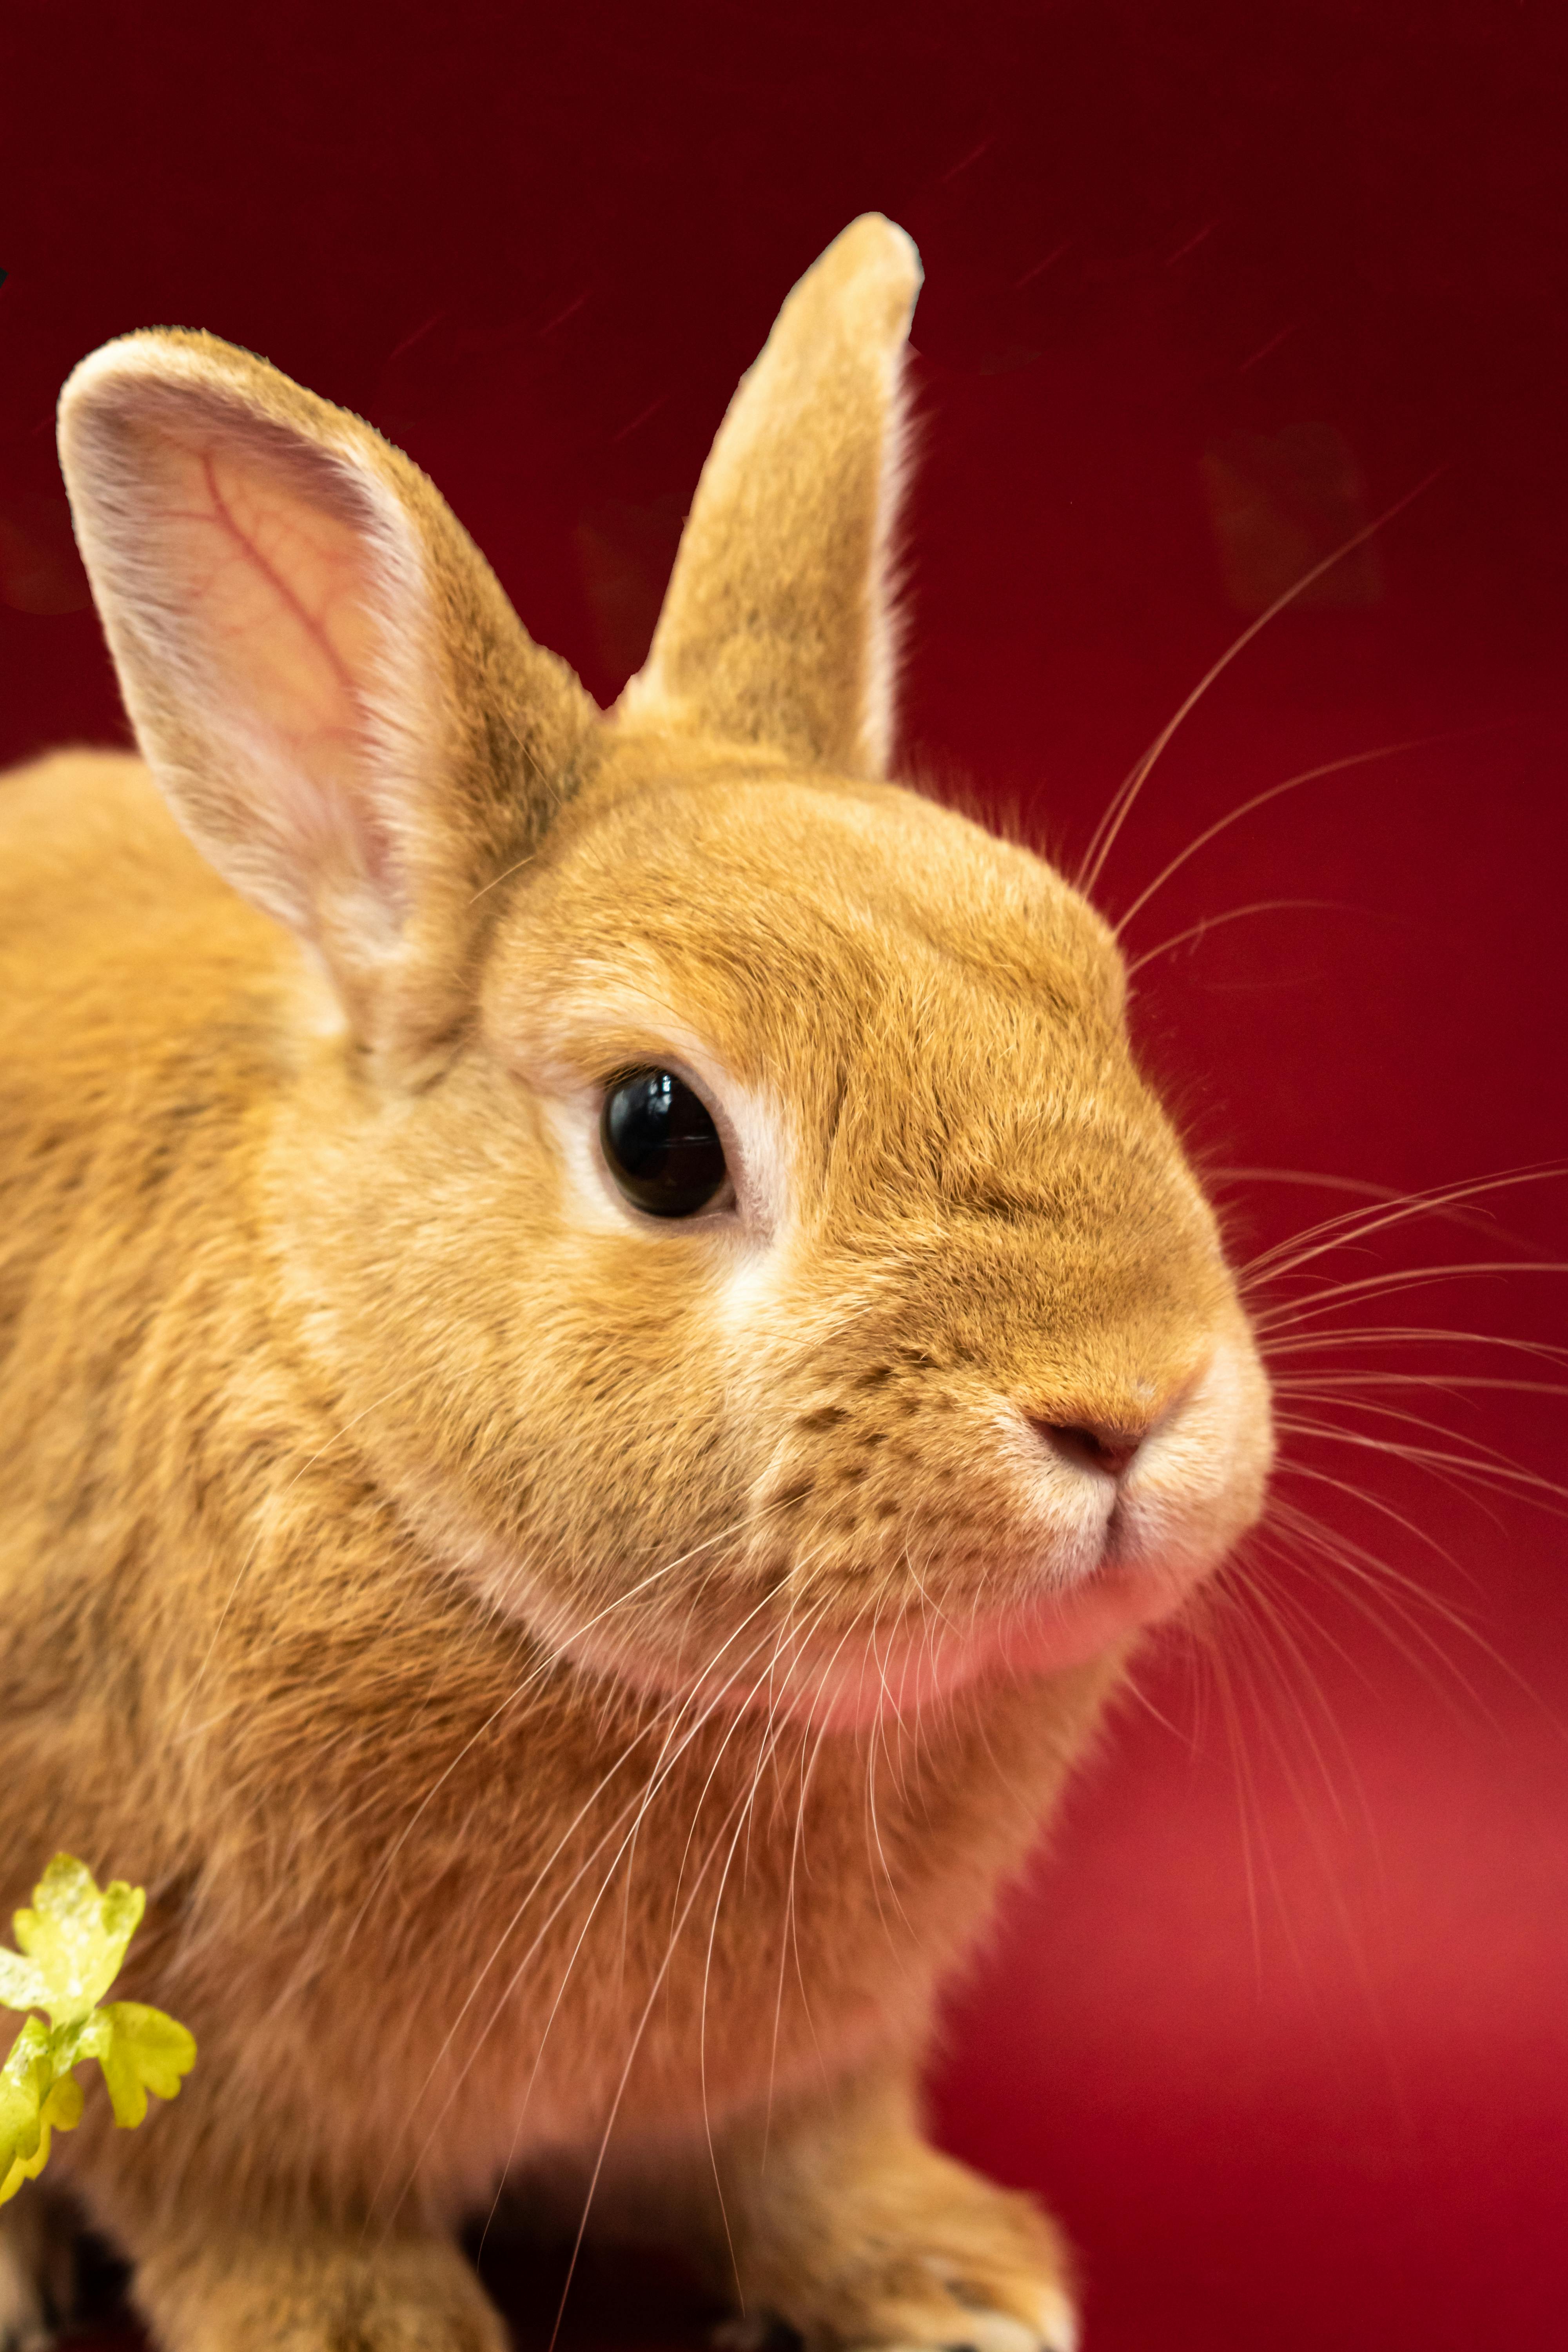 Bunny stock image. Image of cute, rabbit, bunny, eyes - 169727233